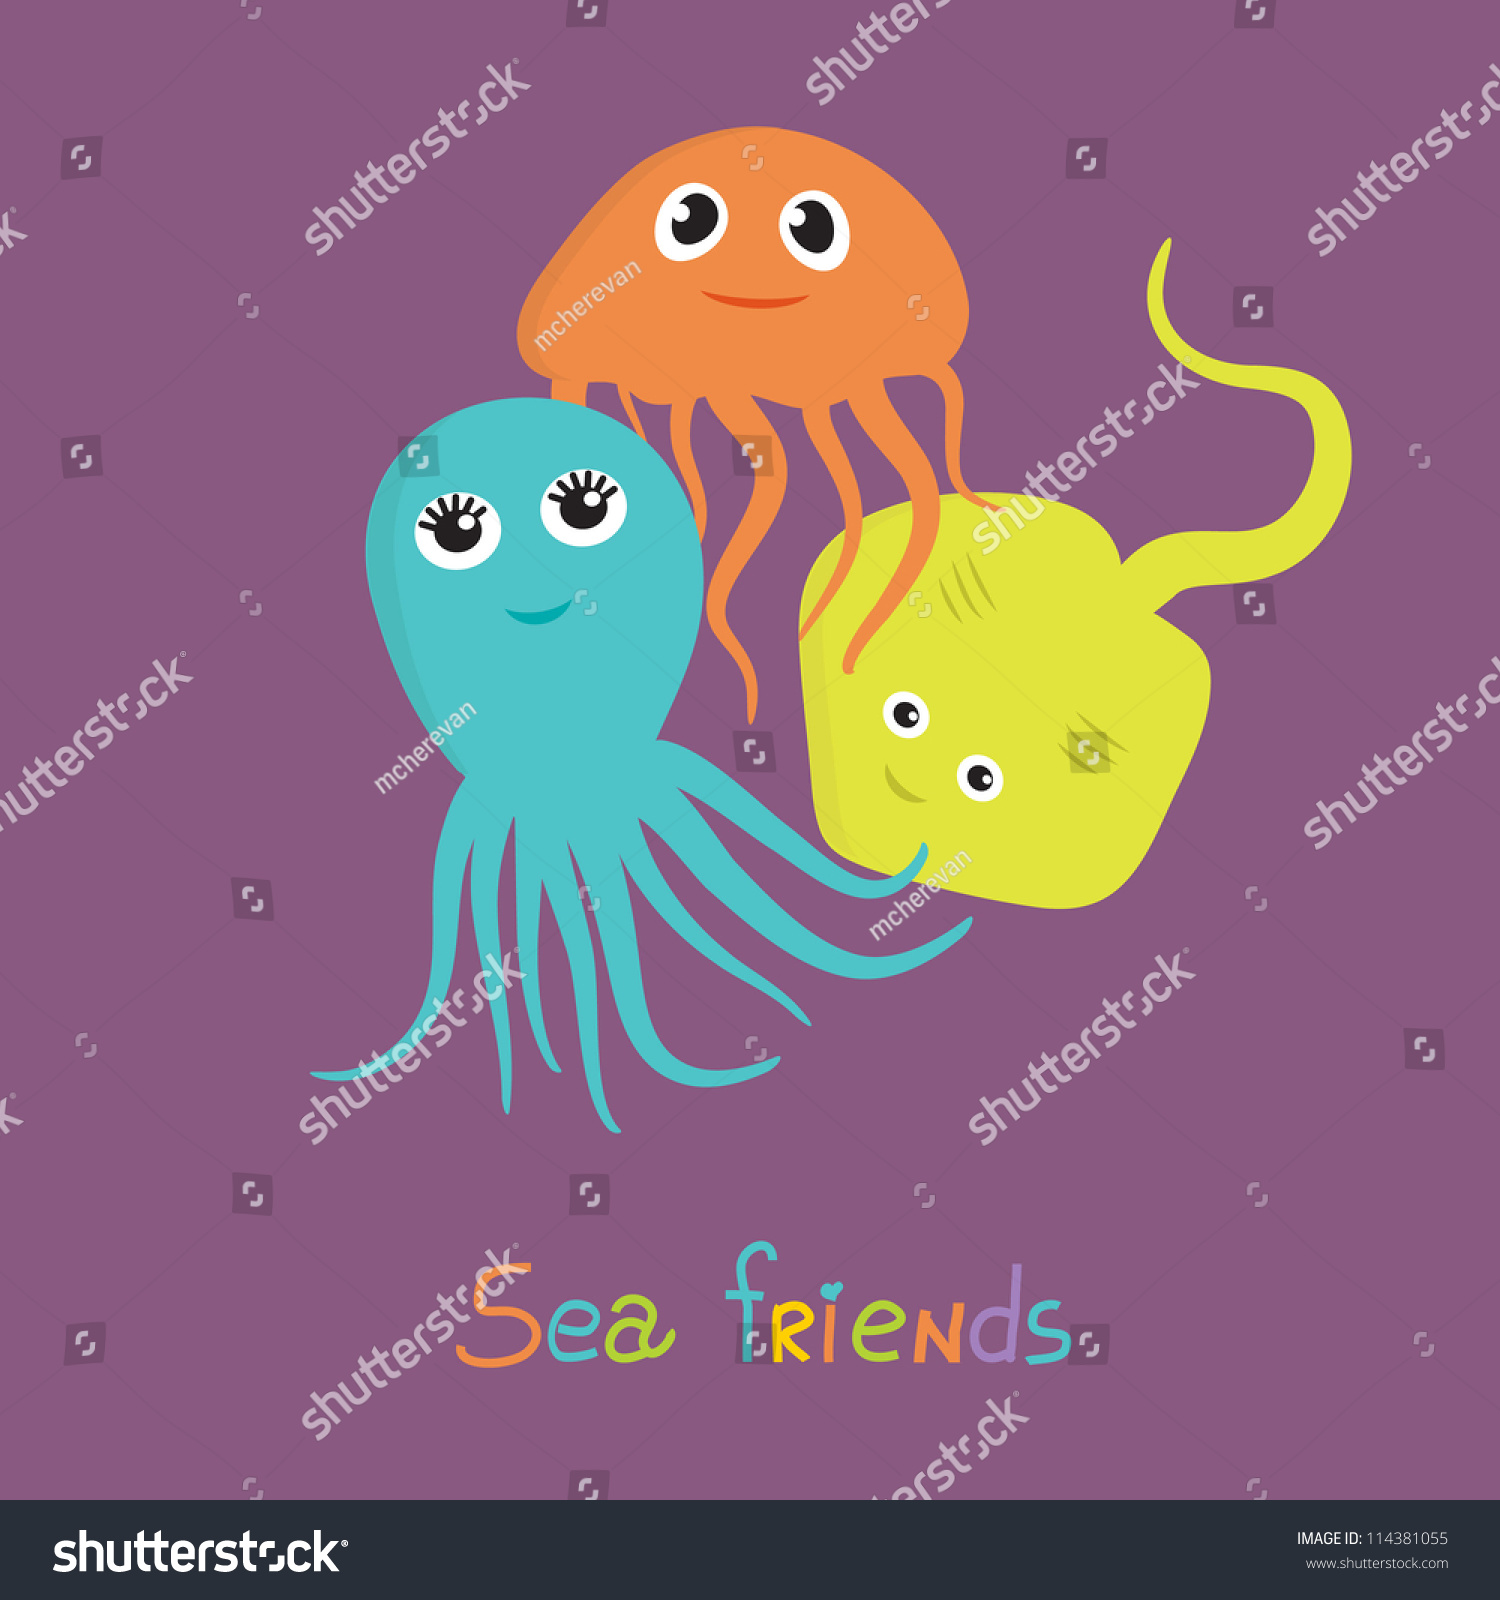 Sea Friends. Cute Cartoon Design With Ocean Animals - Octopus ...